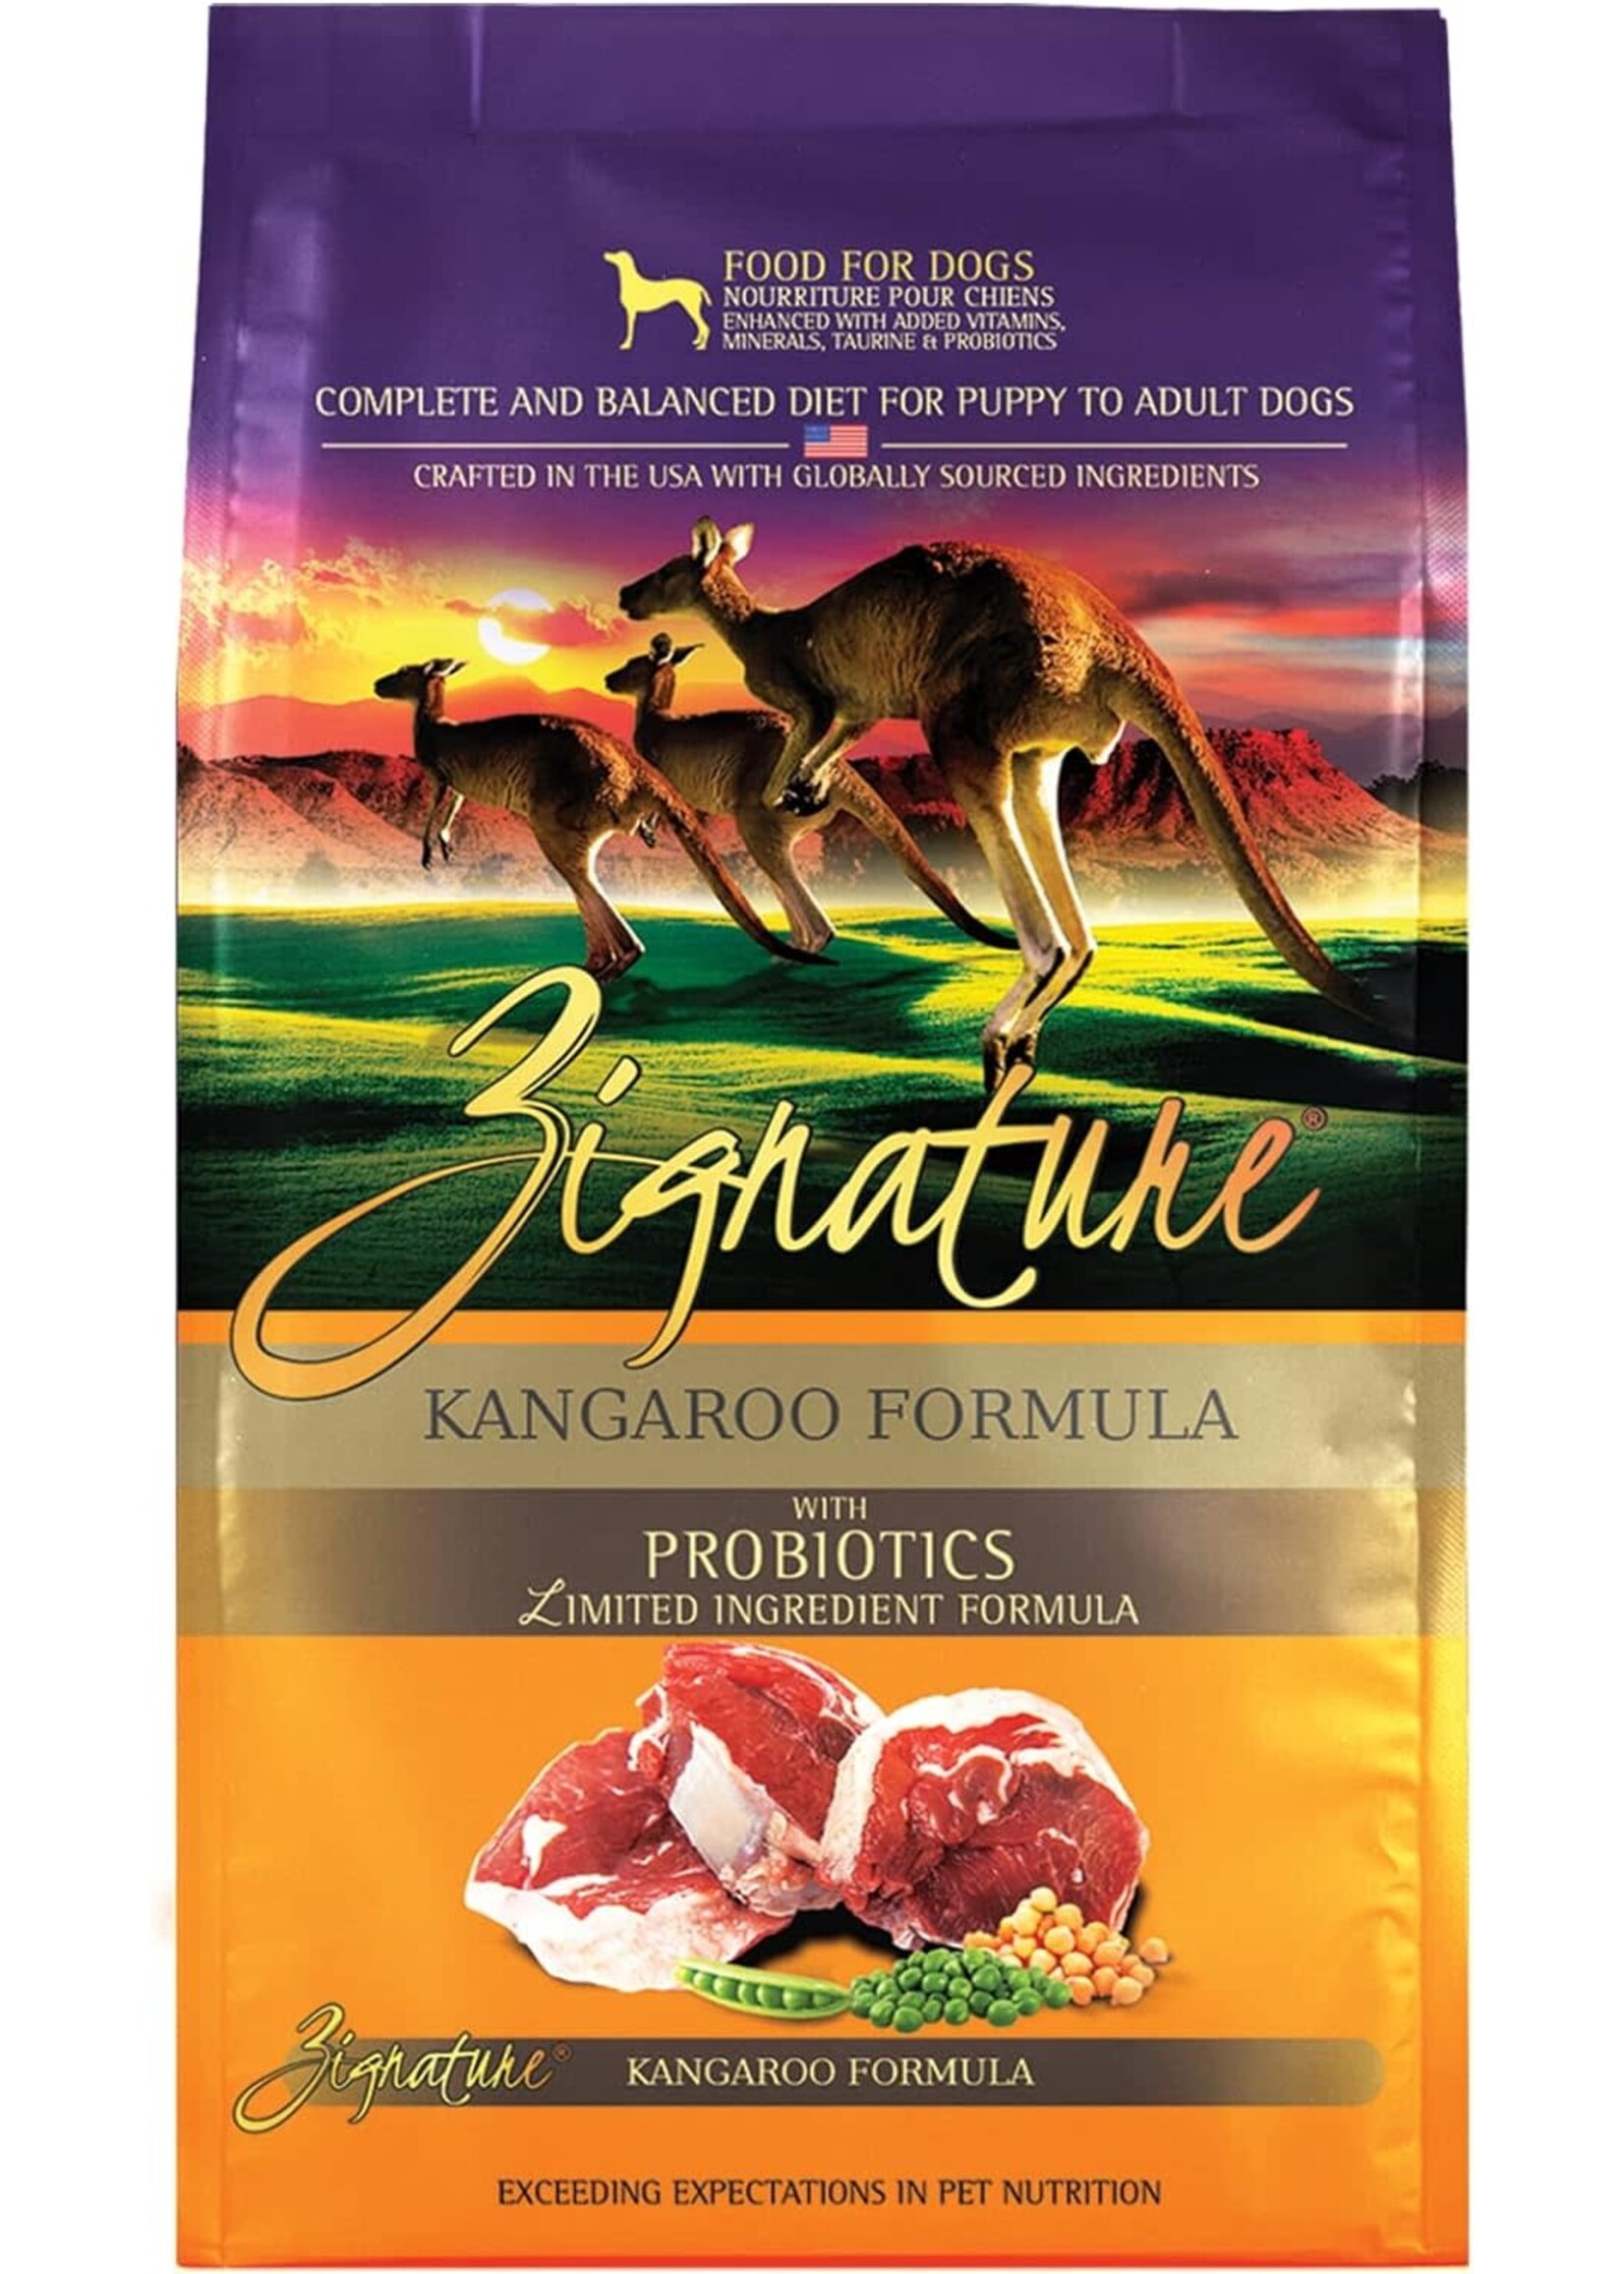 Zignature Kangaroo Formula with Probiotics Limited Ingredient Formula Grain Free All Life Stages Dog Food 4 lbs